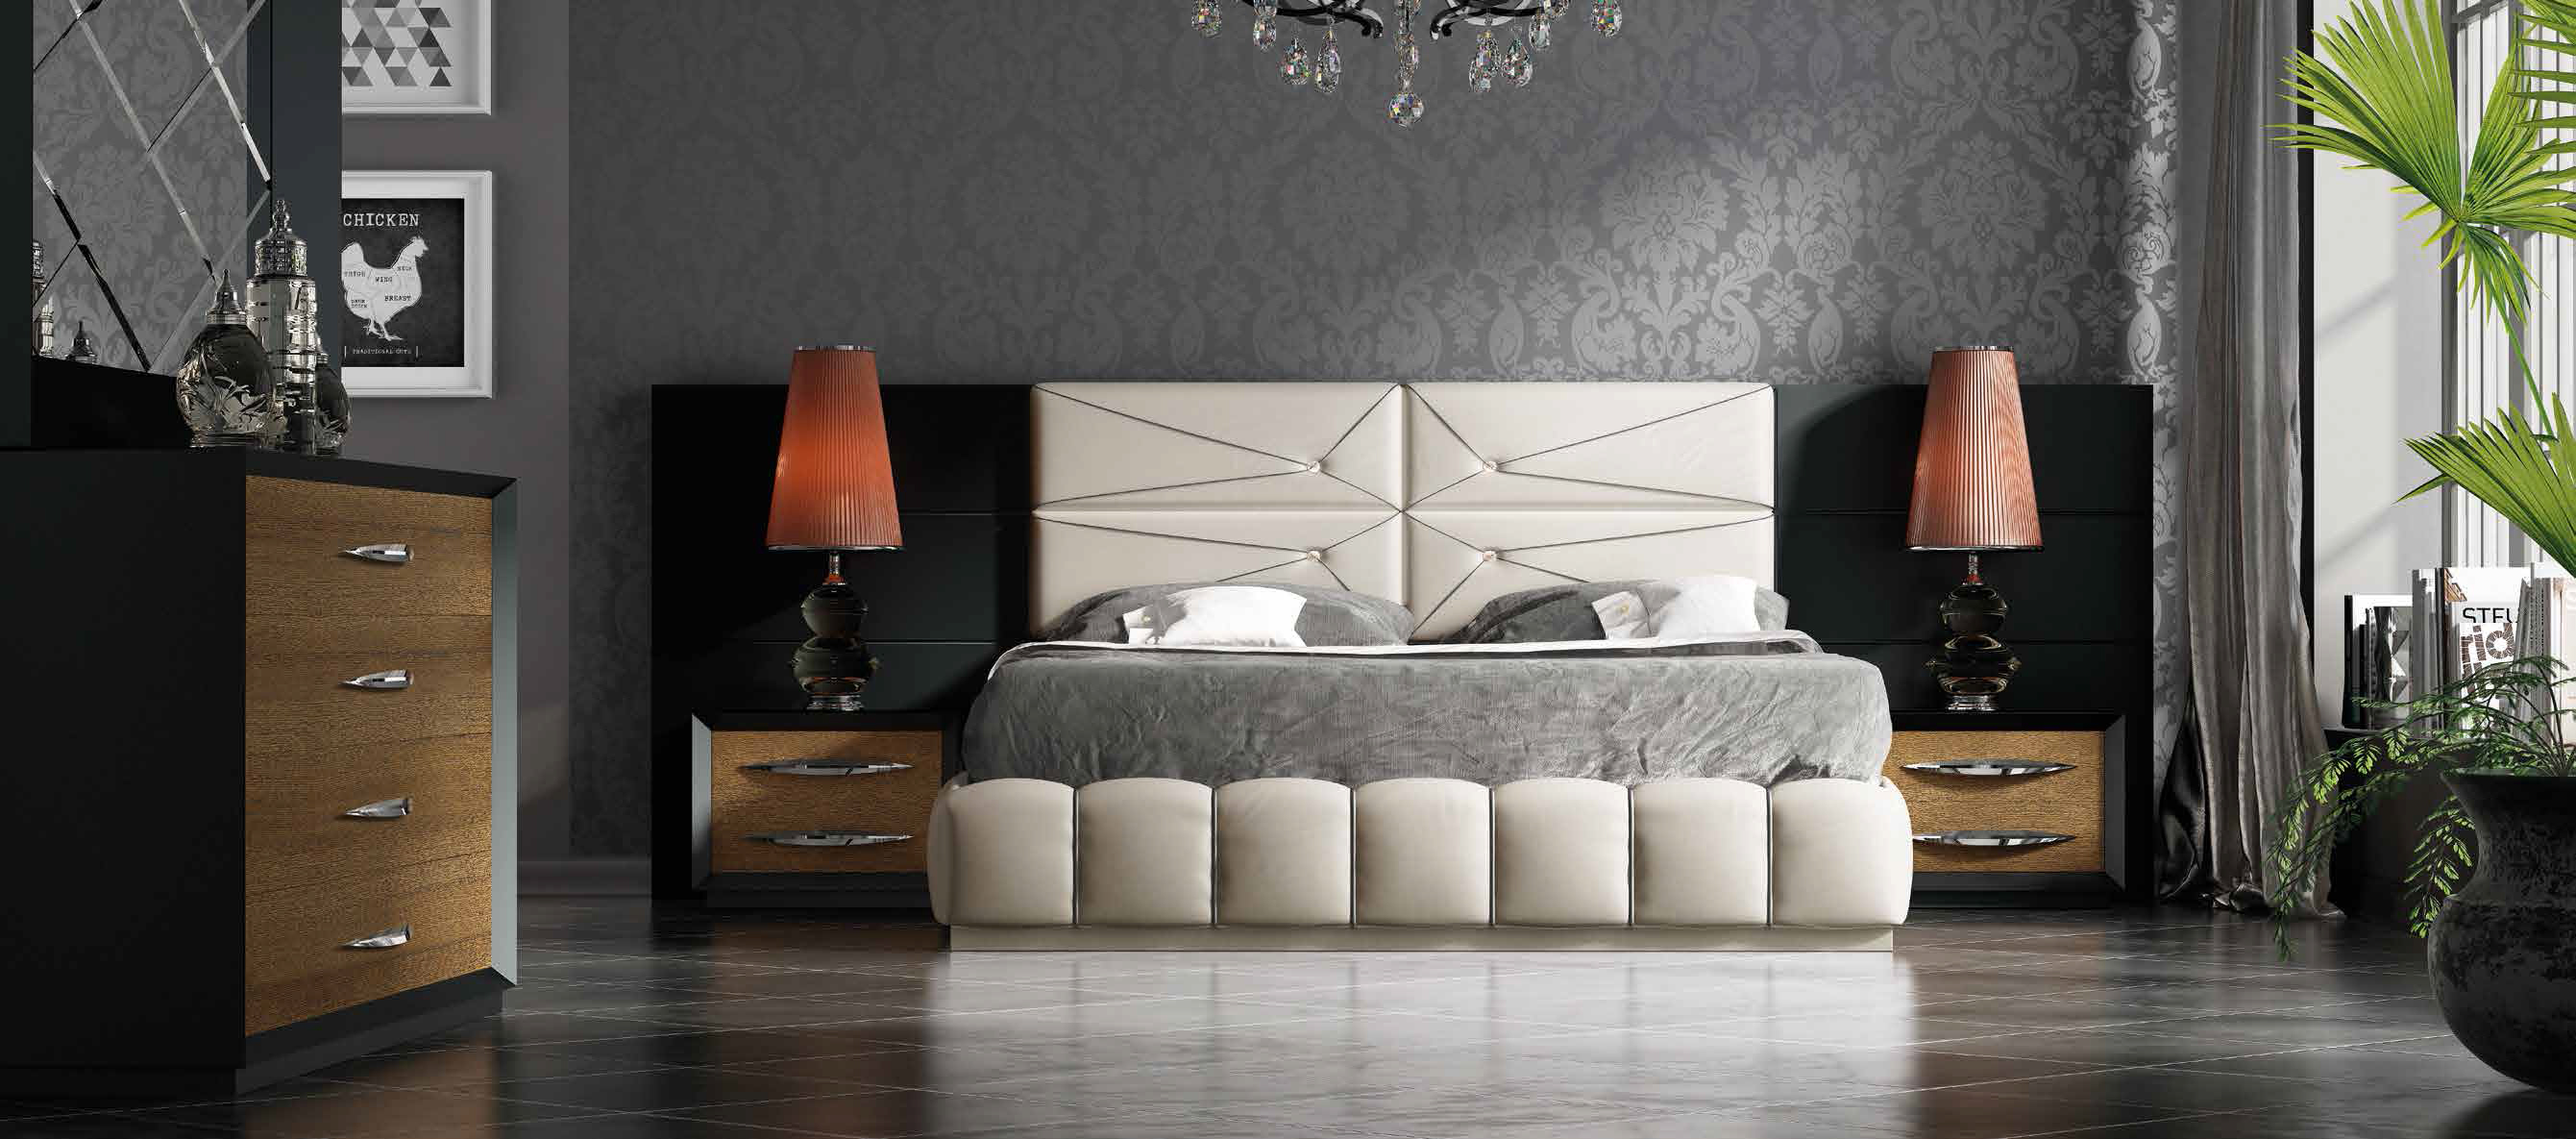 Brands Franco Furniture Bedrooms vol2, Spain DOR 72